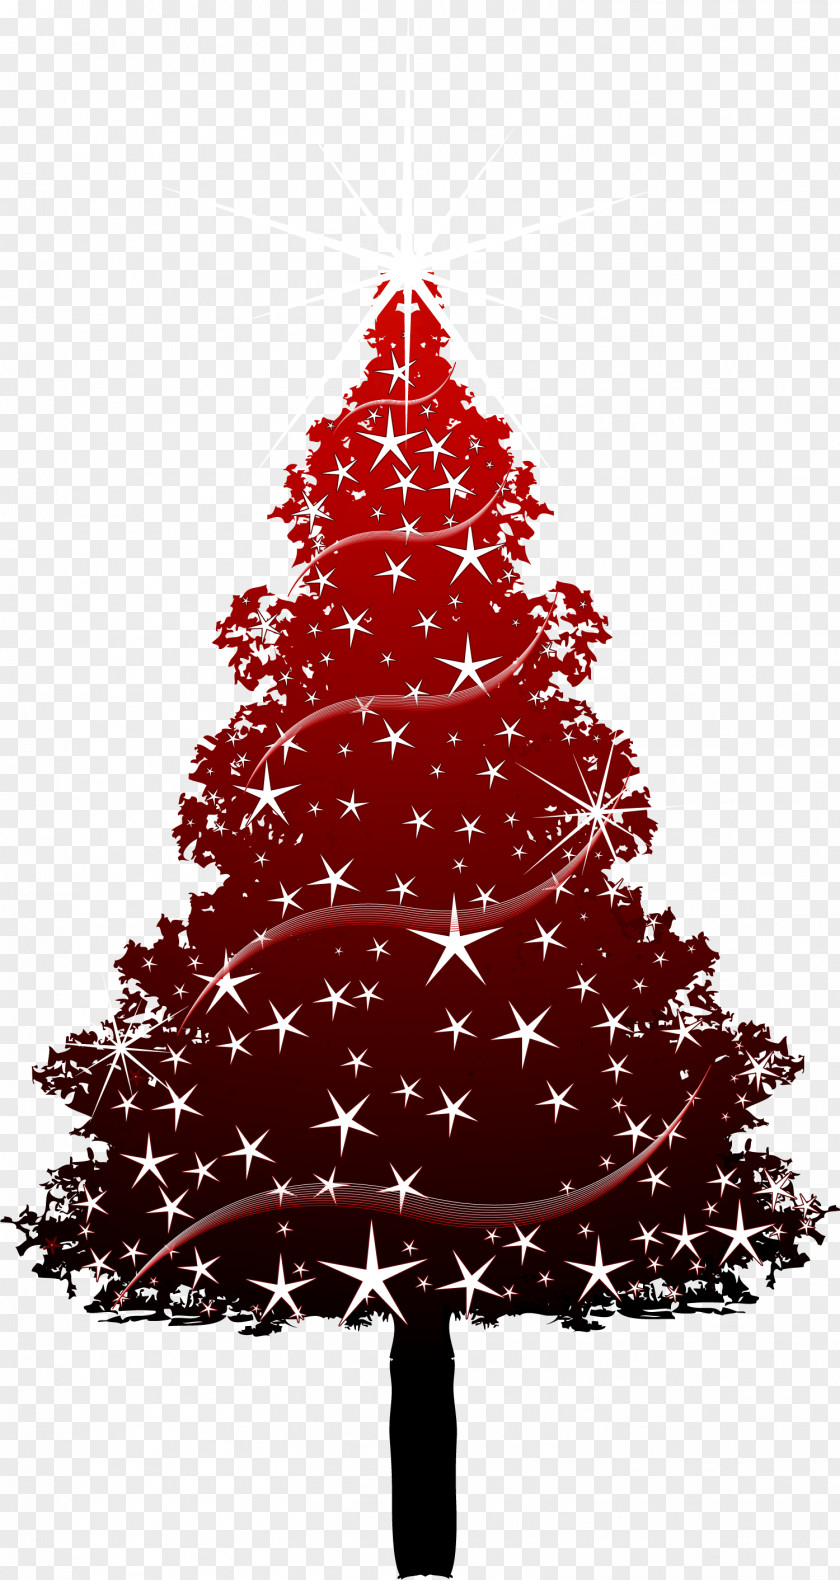 Cartoon Red Christmas Tree PNG